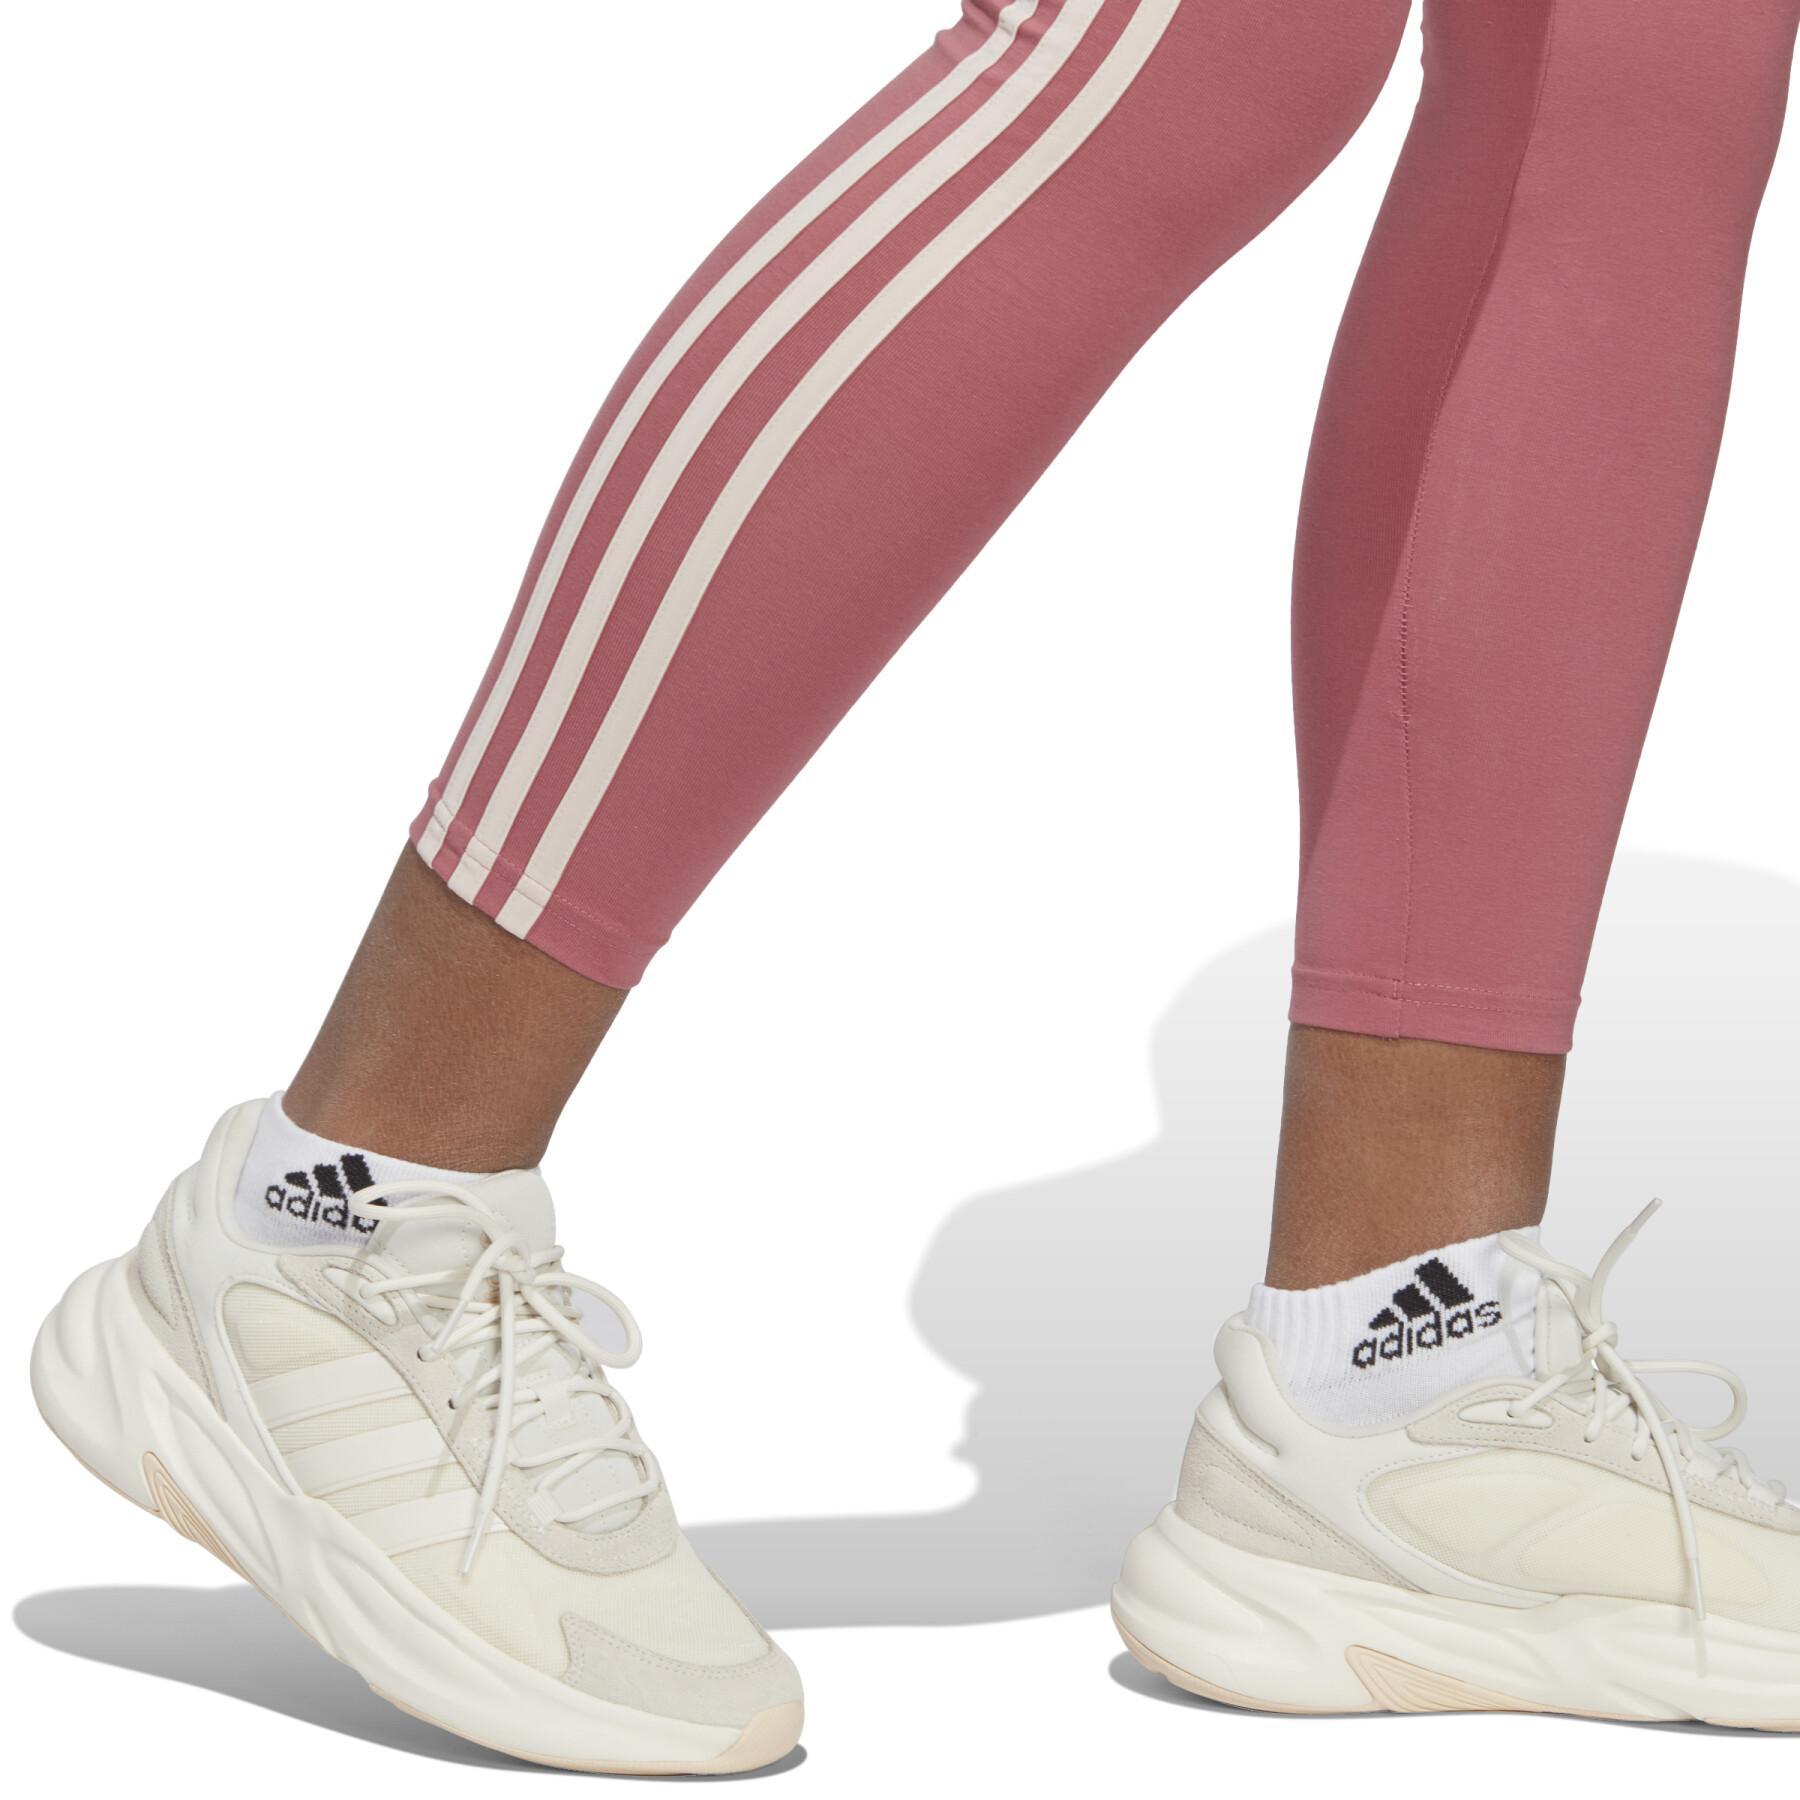 Legging hoge taille eenvoudige jersey vrouw adidas Essentials 3-Stripes